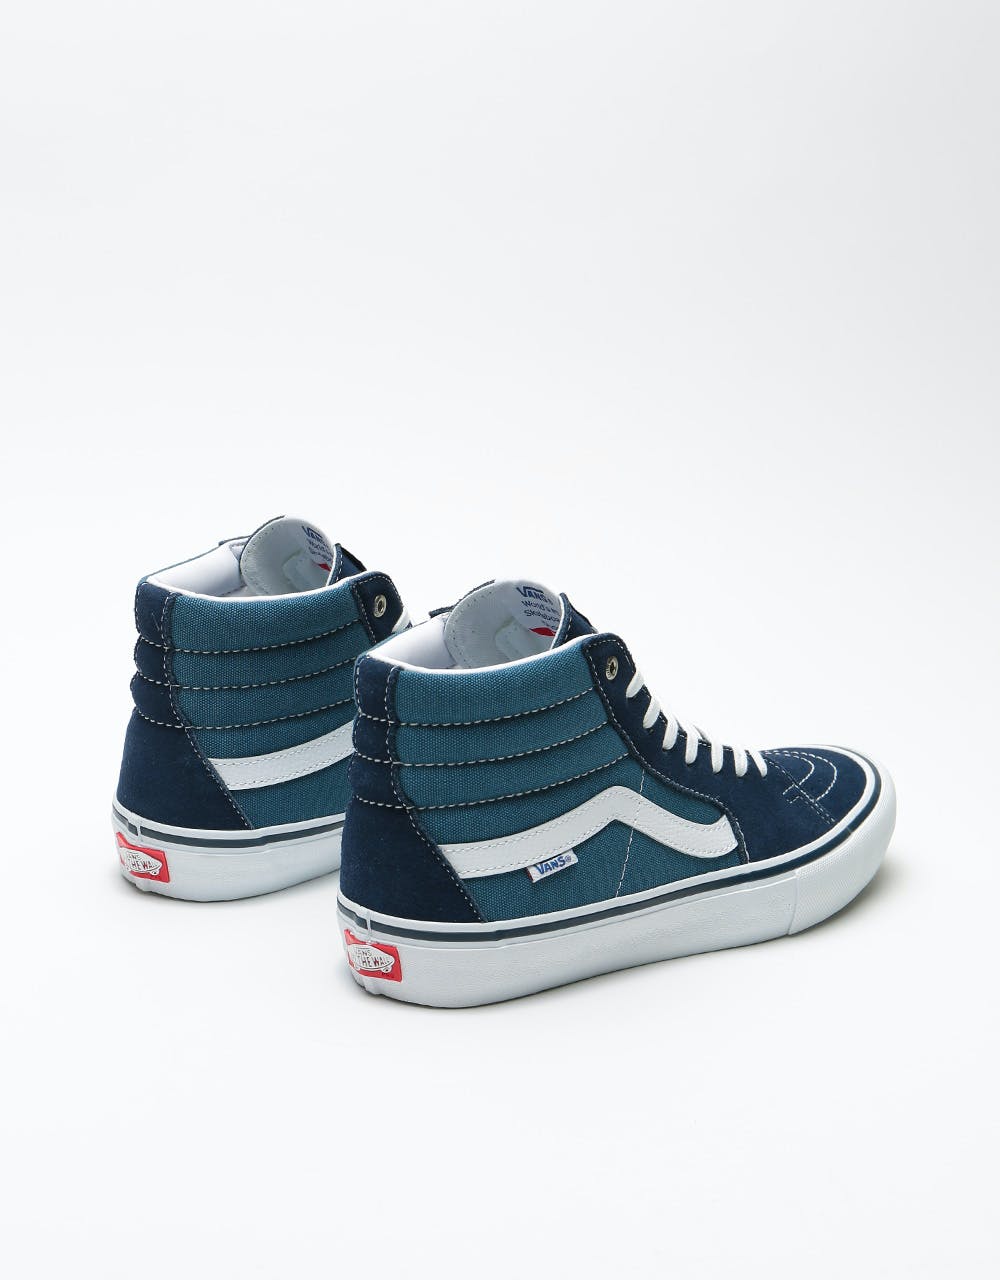 Vans Sk8-Hi Pro Skate Shoes - Navy/Stv Navy